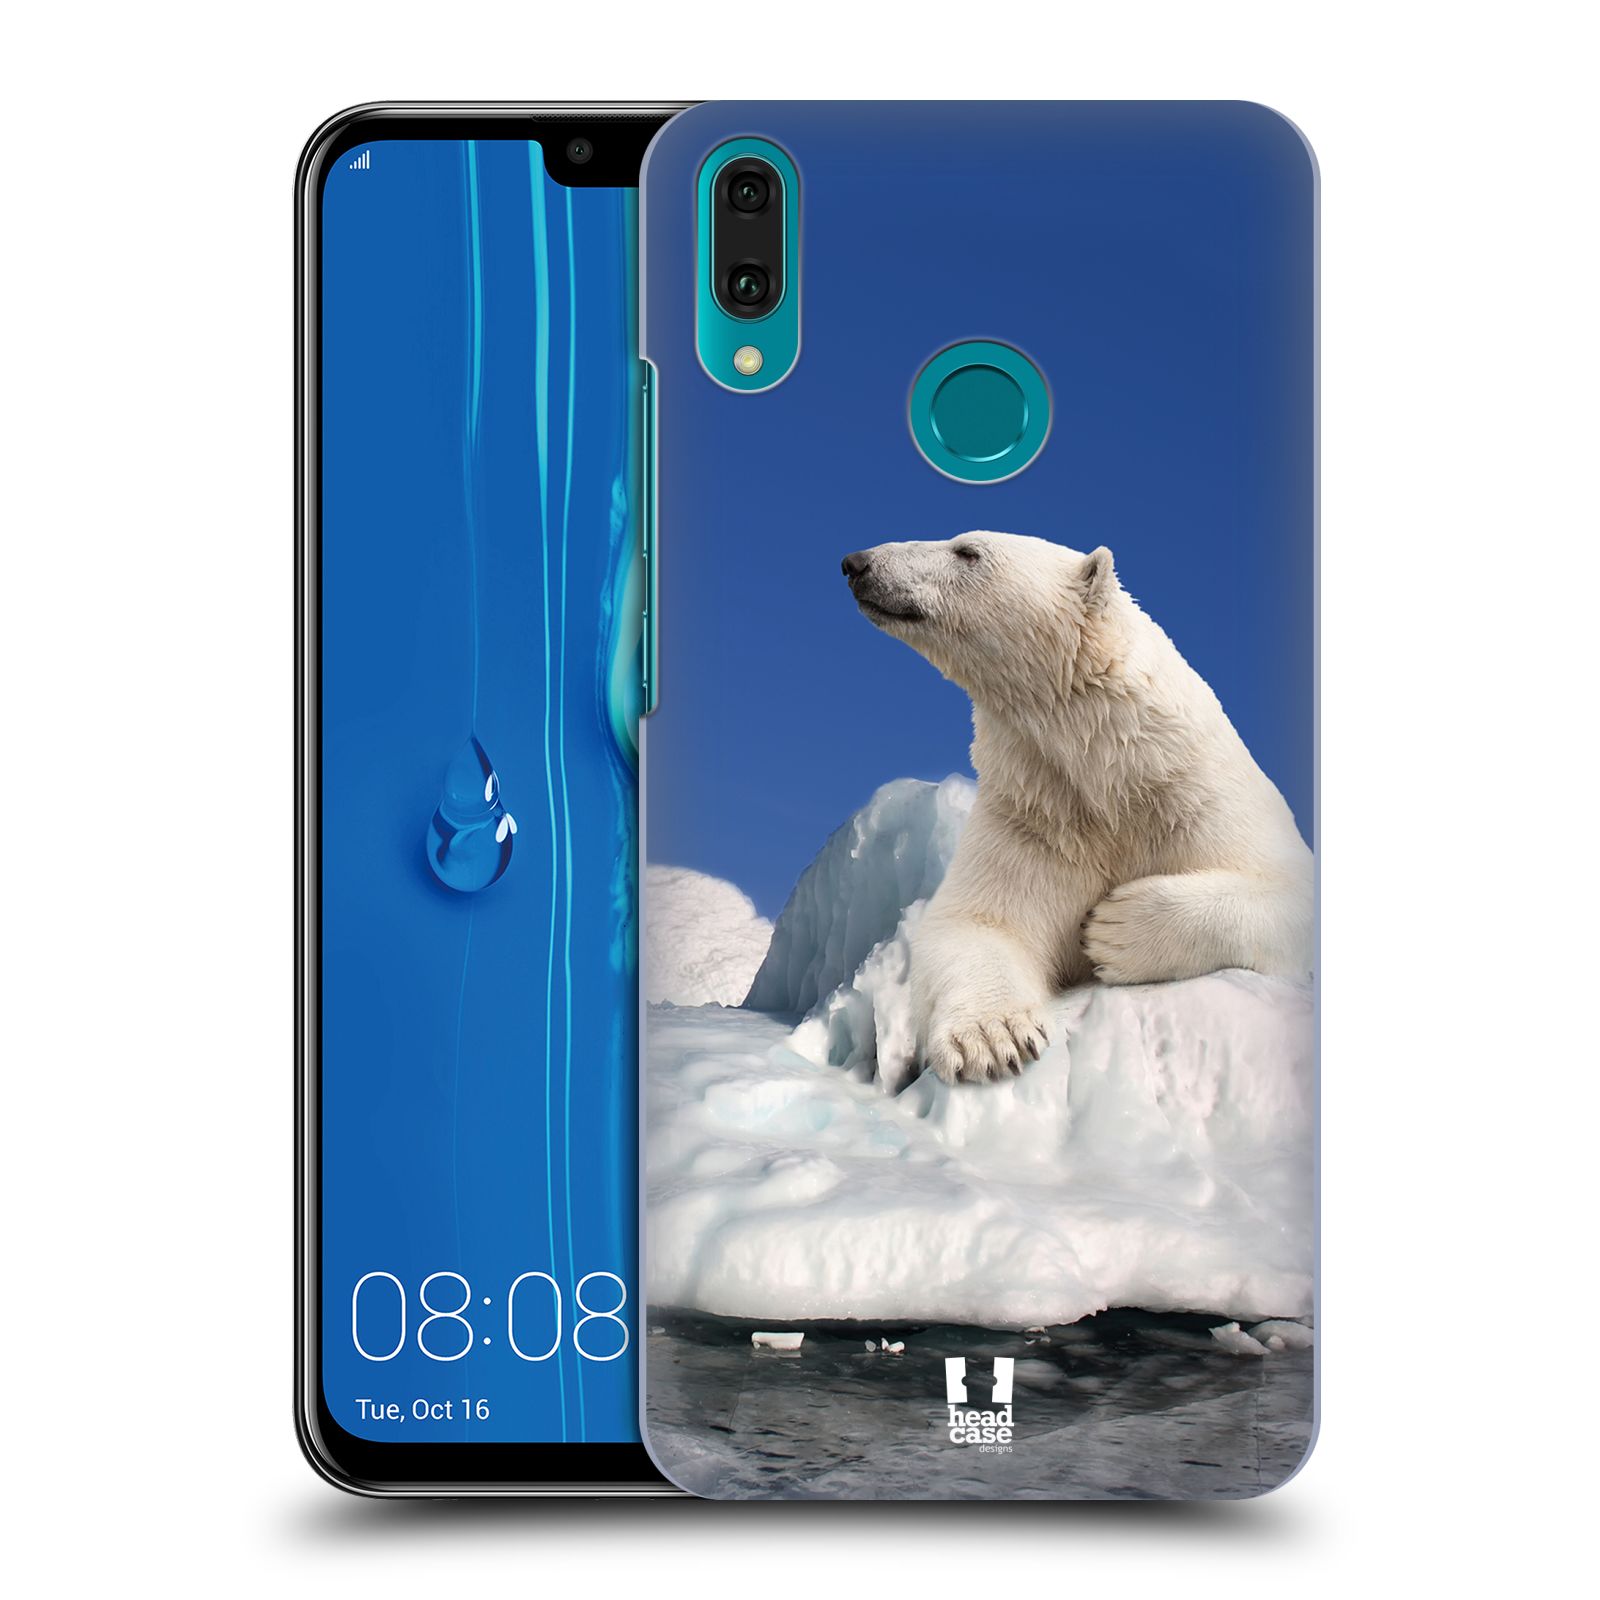 Pouzdro na mobil Huawei Y9 2019 - HEAD CASE - vzor Divočina, Divoký život a zvířata foto LEDNÍ MEDVĚD NA LEDOVCI A NEBE MODRÁ